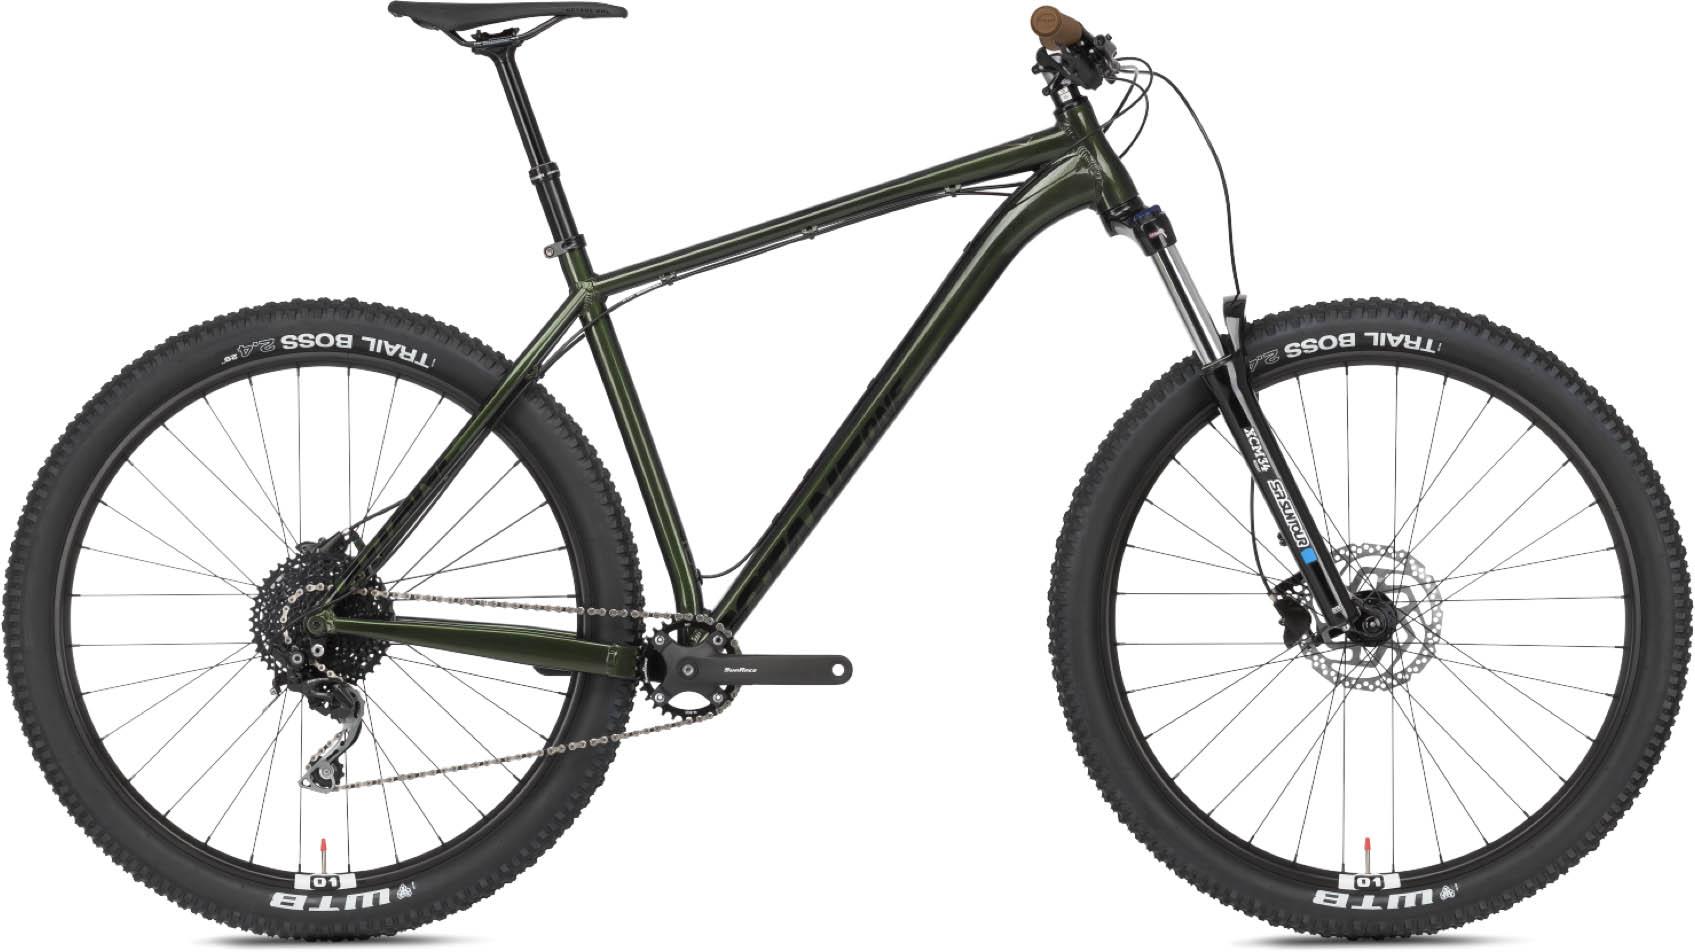 Octane One Prone 29 Hardtail Bike (2022) - Green